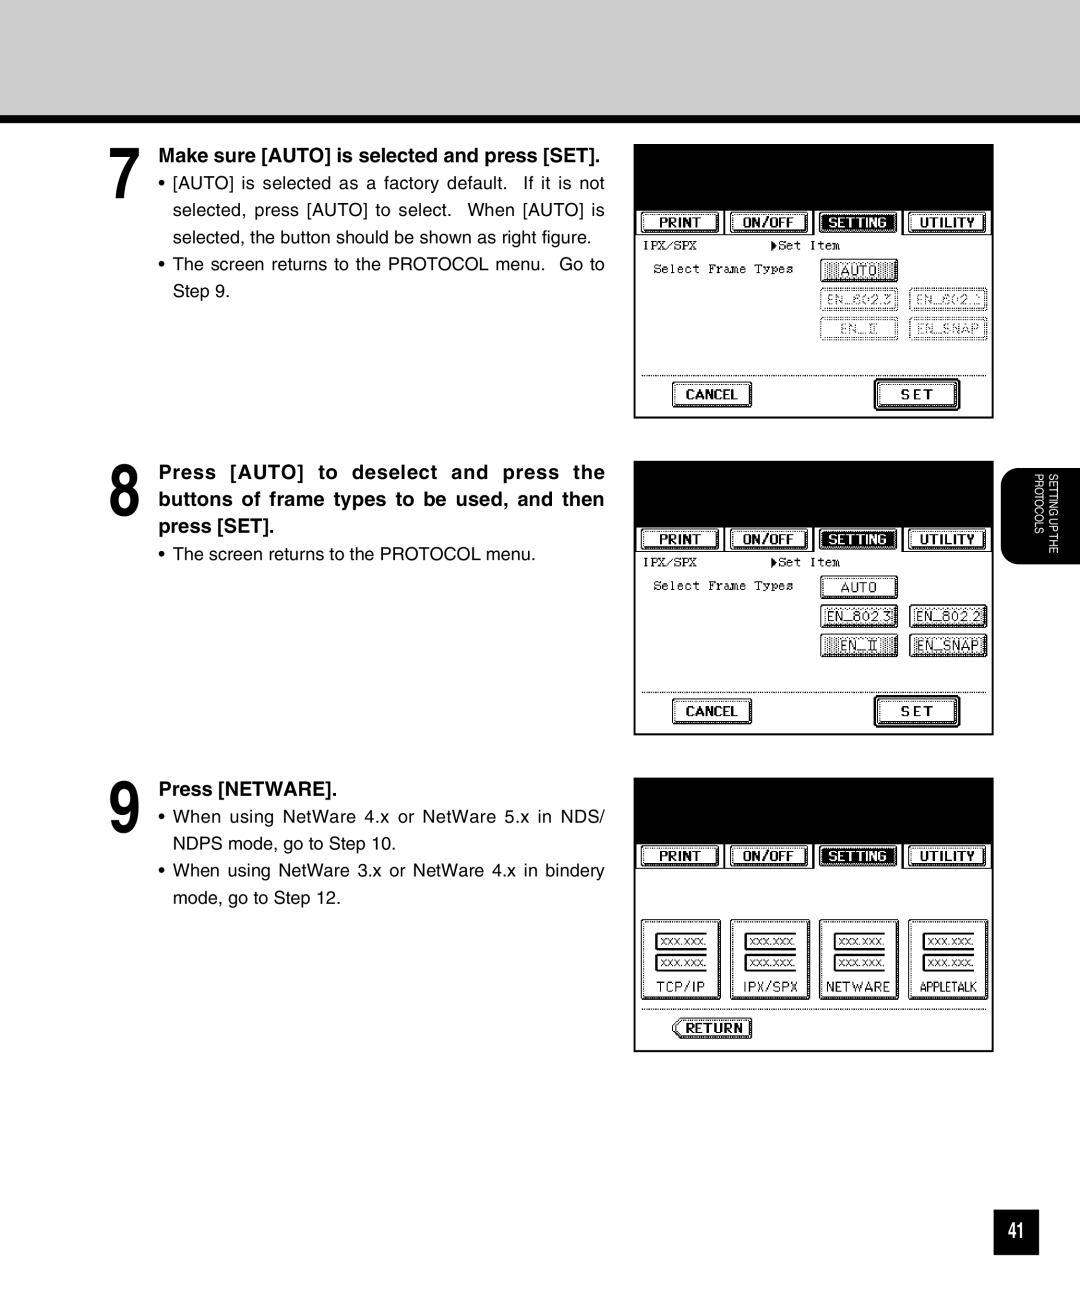 Toshiba GA-1040 manual Make sure AUTO is selected and press SET, Press NETWARE 